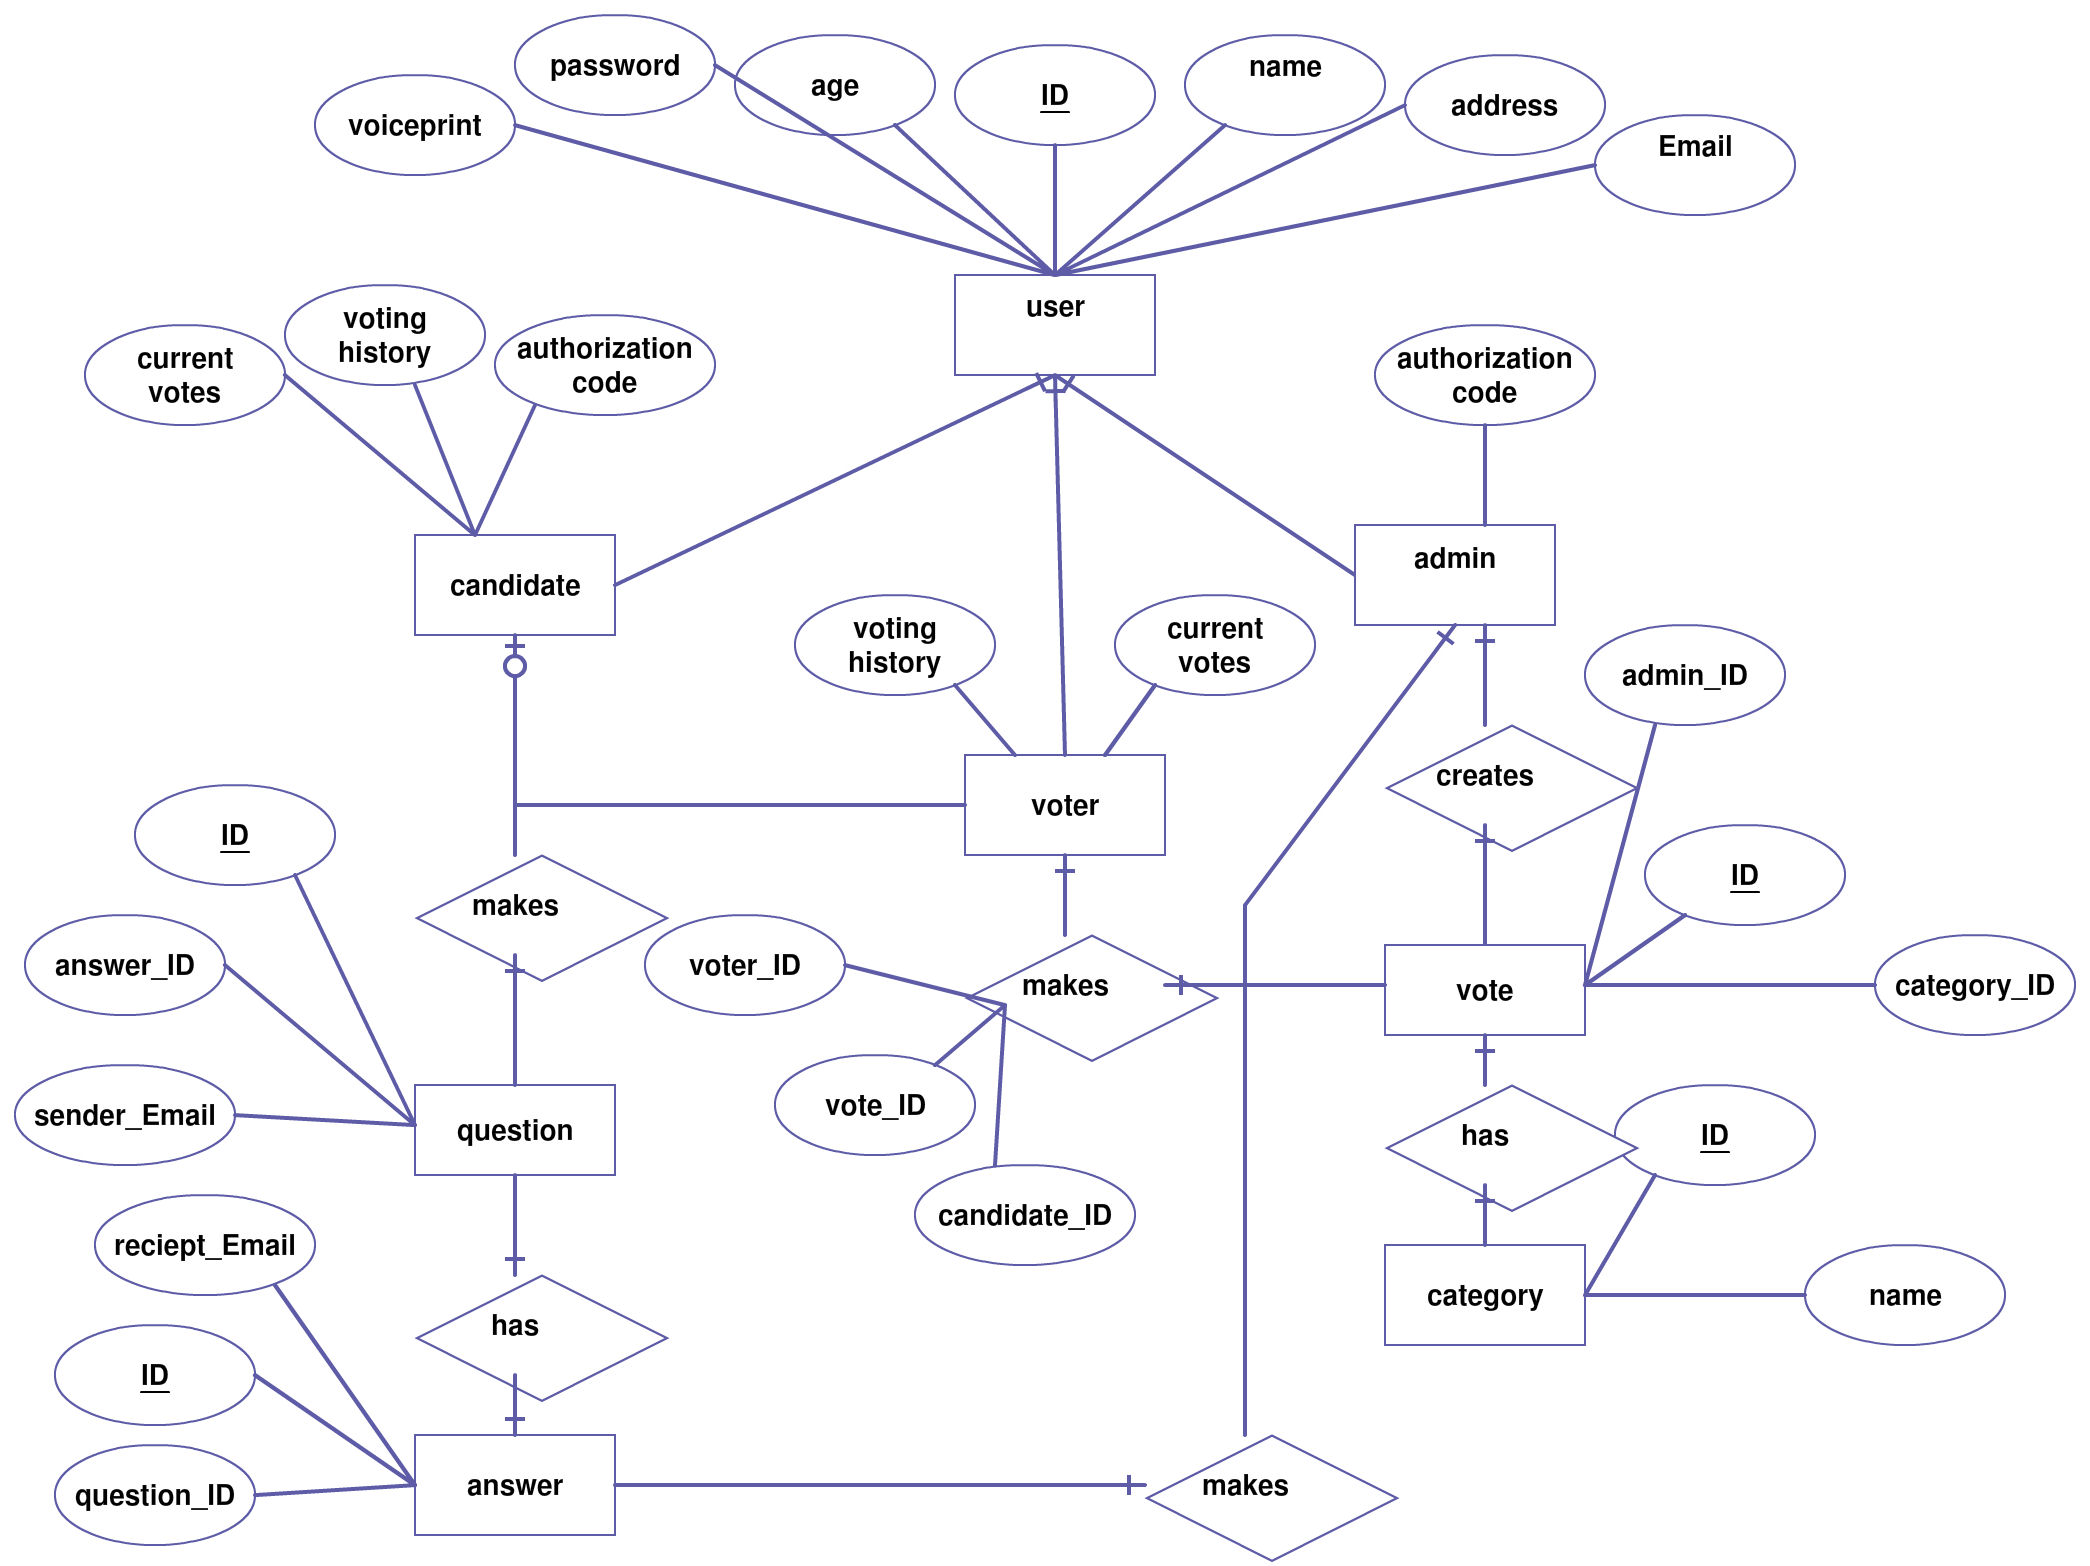 Pin On Entity Relationship Diagram Templates for Er Diagram Online